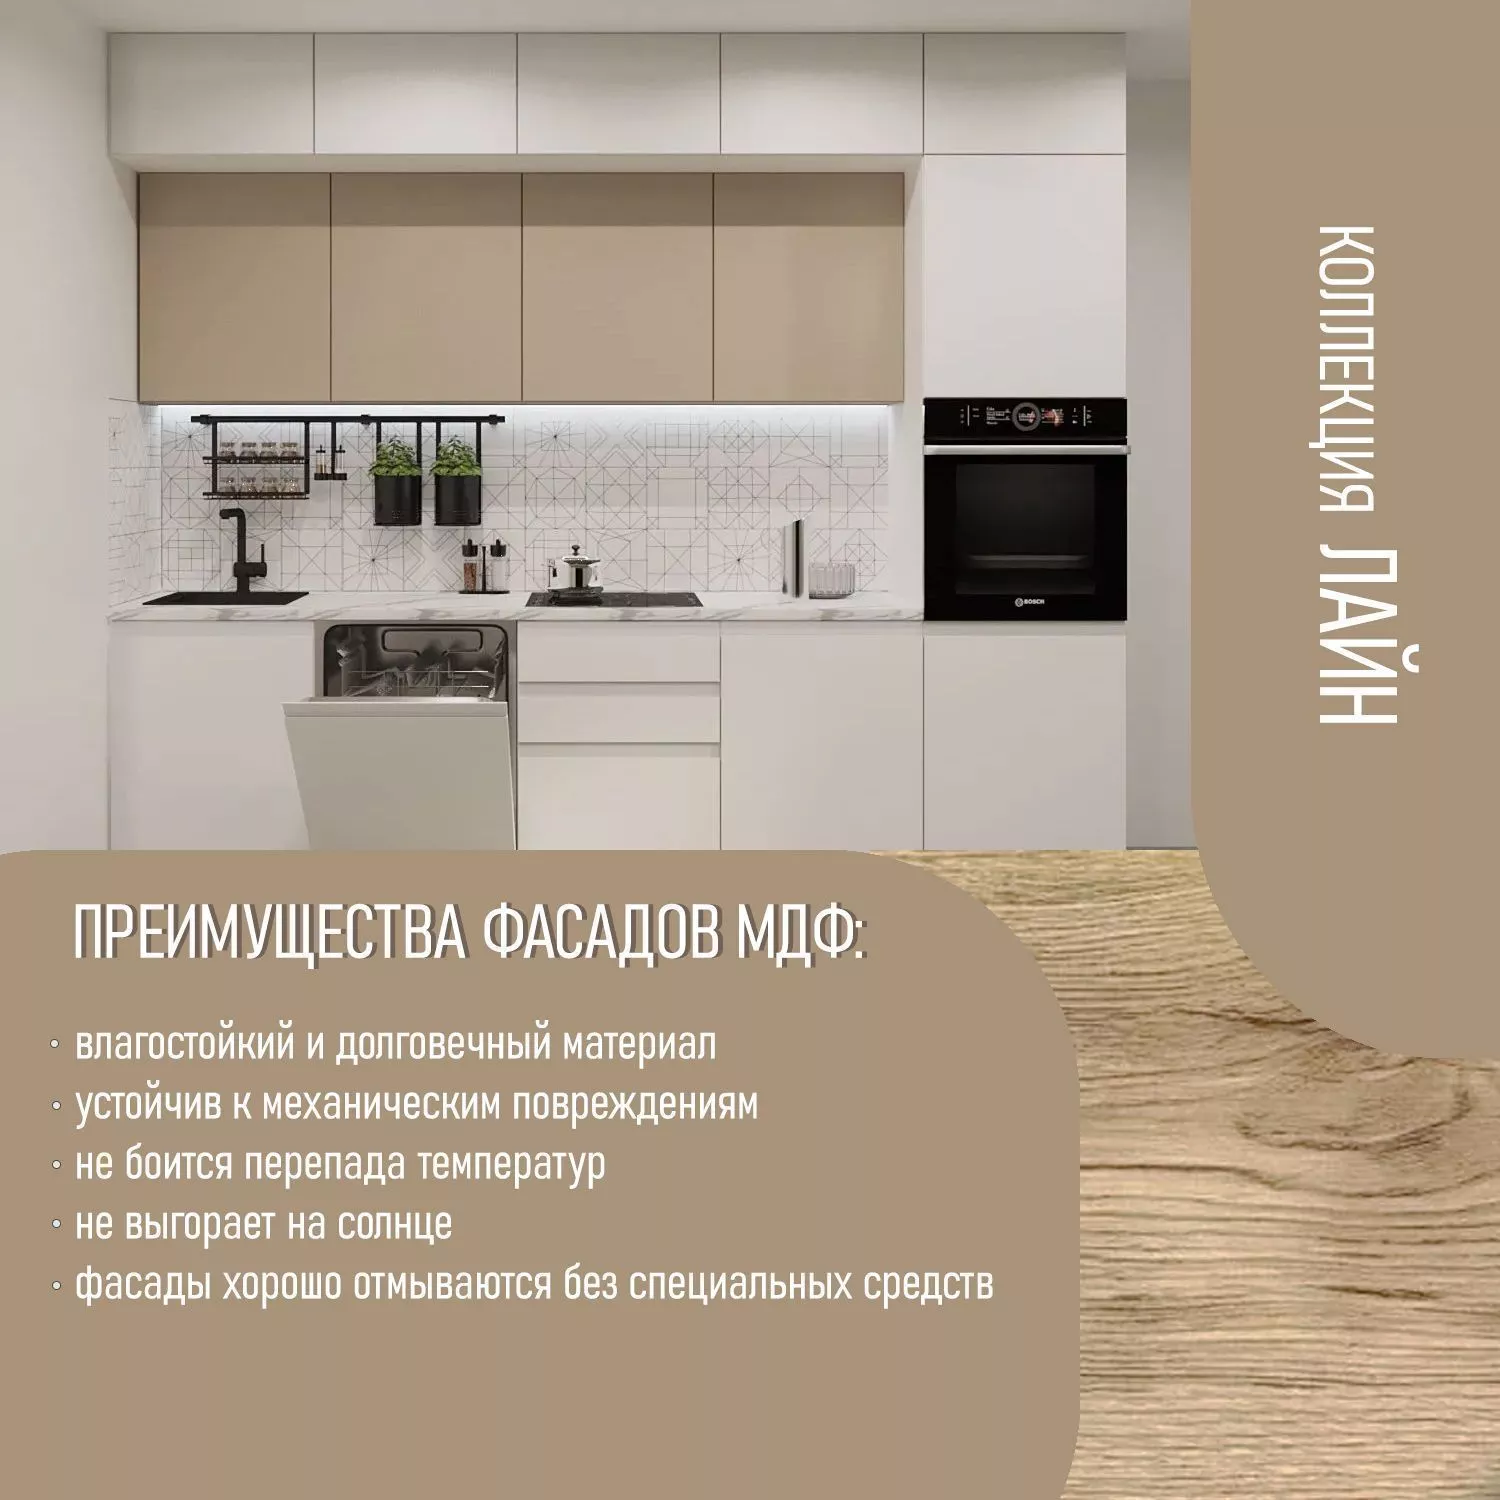 Прямой кухонный гарнитур Тальк / Пикрит Лайн 3 метра (арт.56)